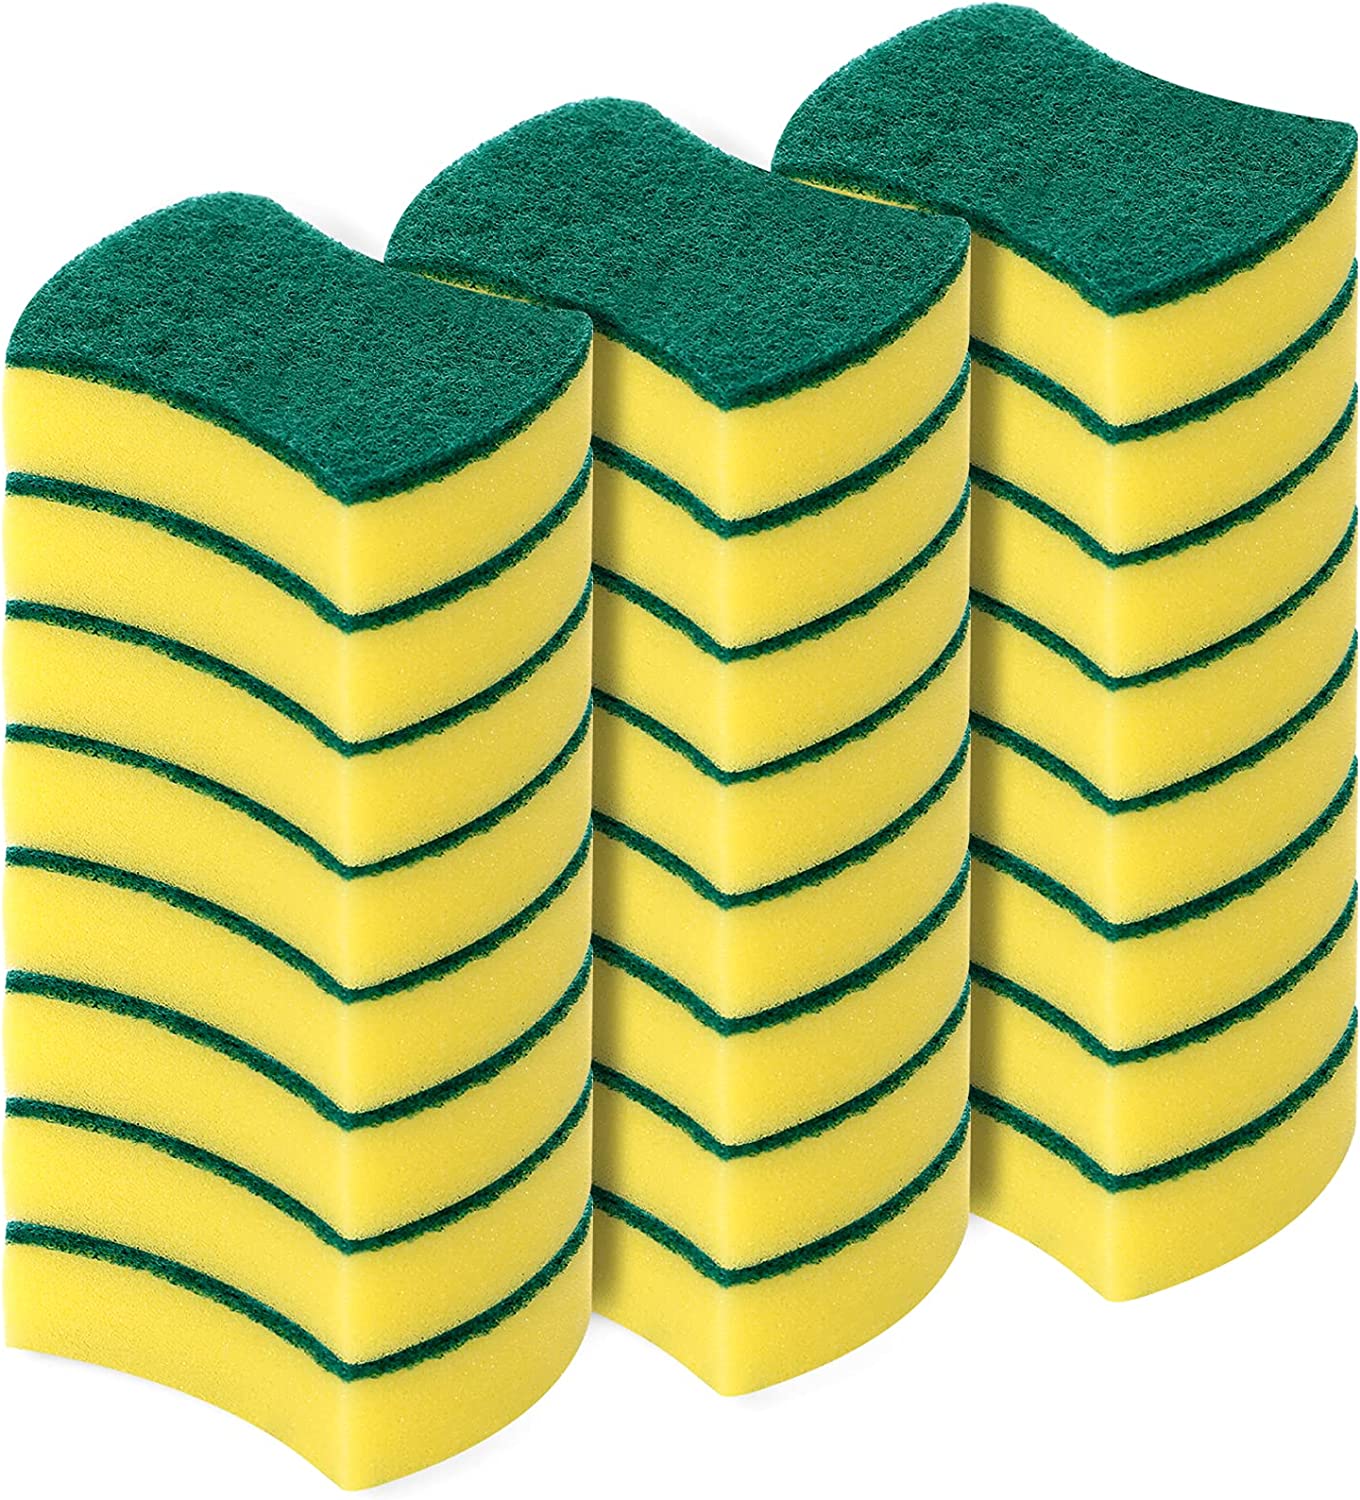 WUHUIXOZ Non-Scratch Microfiber Cleaning Sponges, 24-Pack